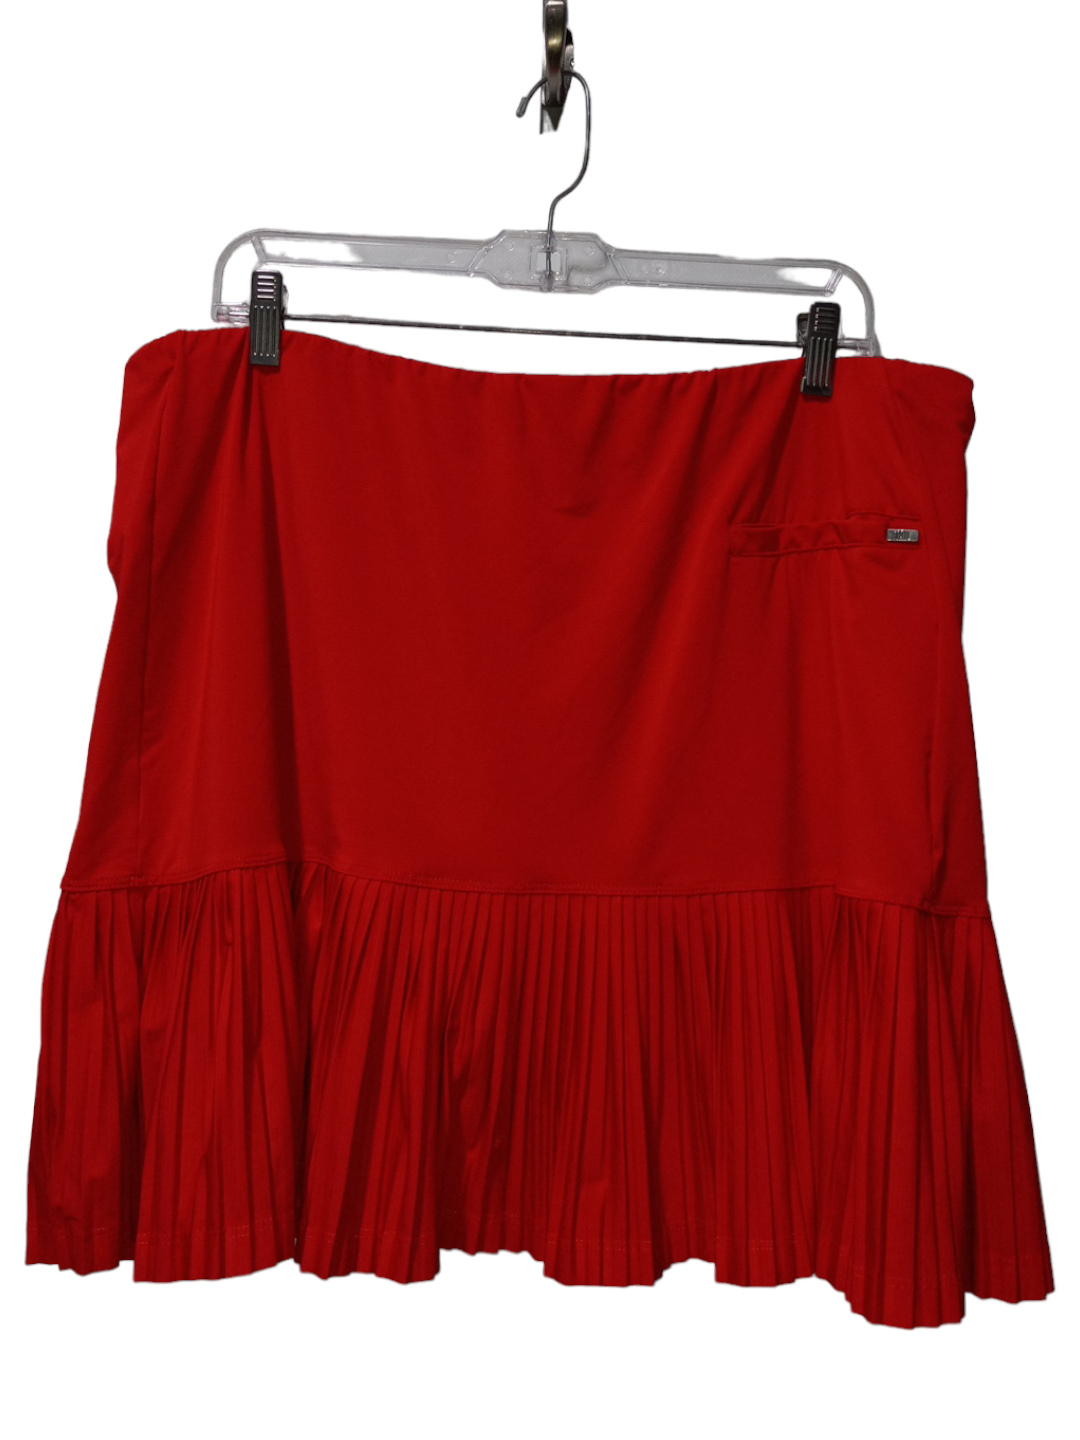 Red Skirt Mini & Short Tail, Size 2x